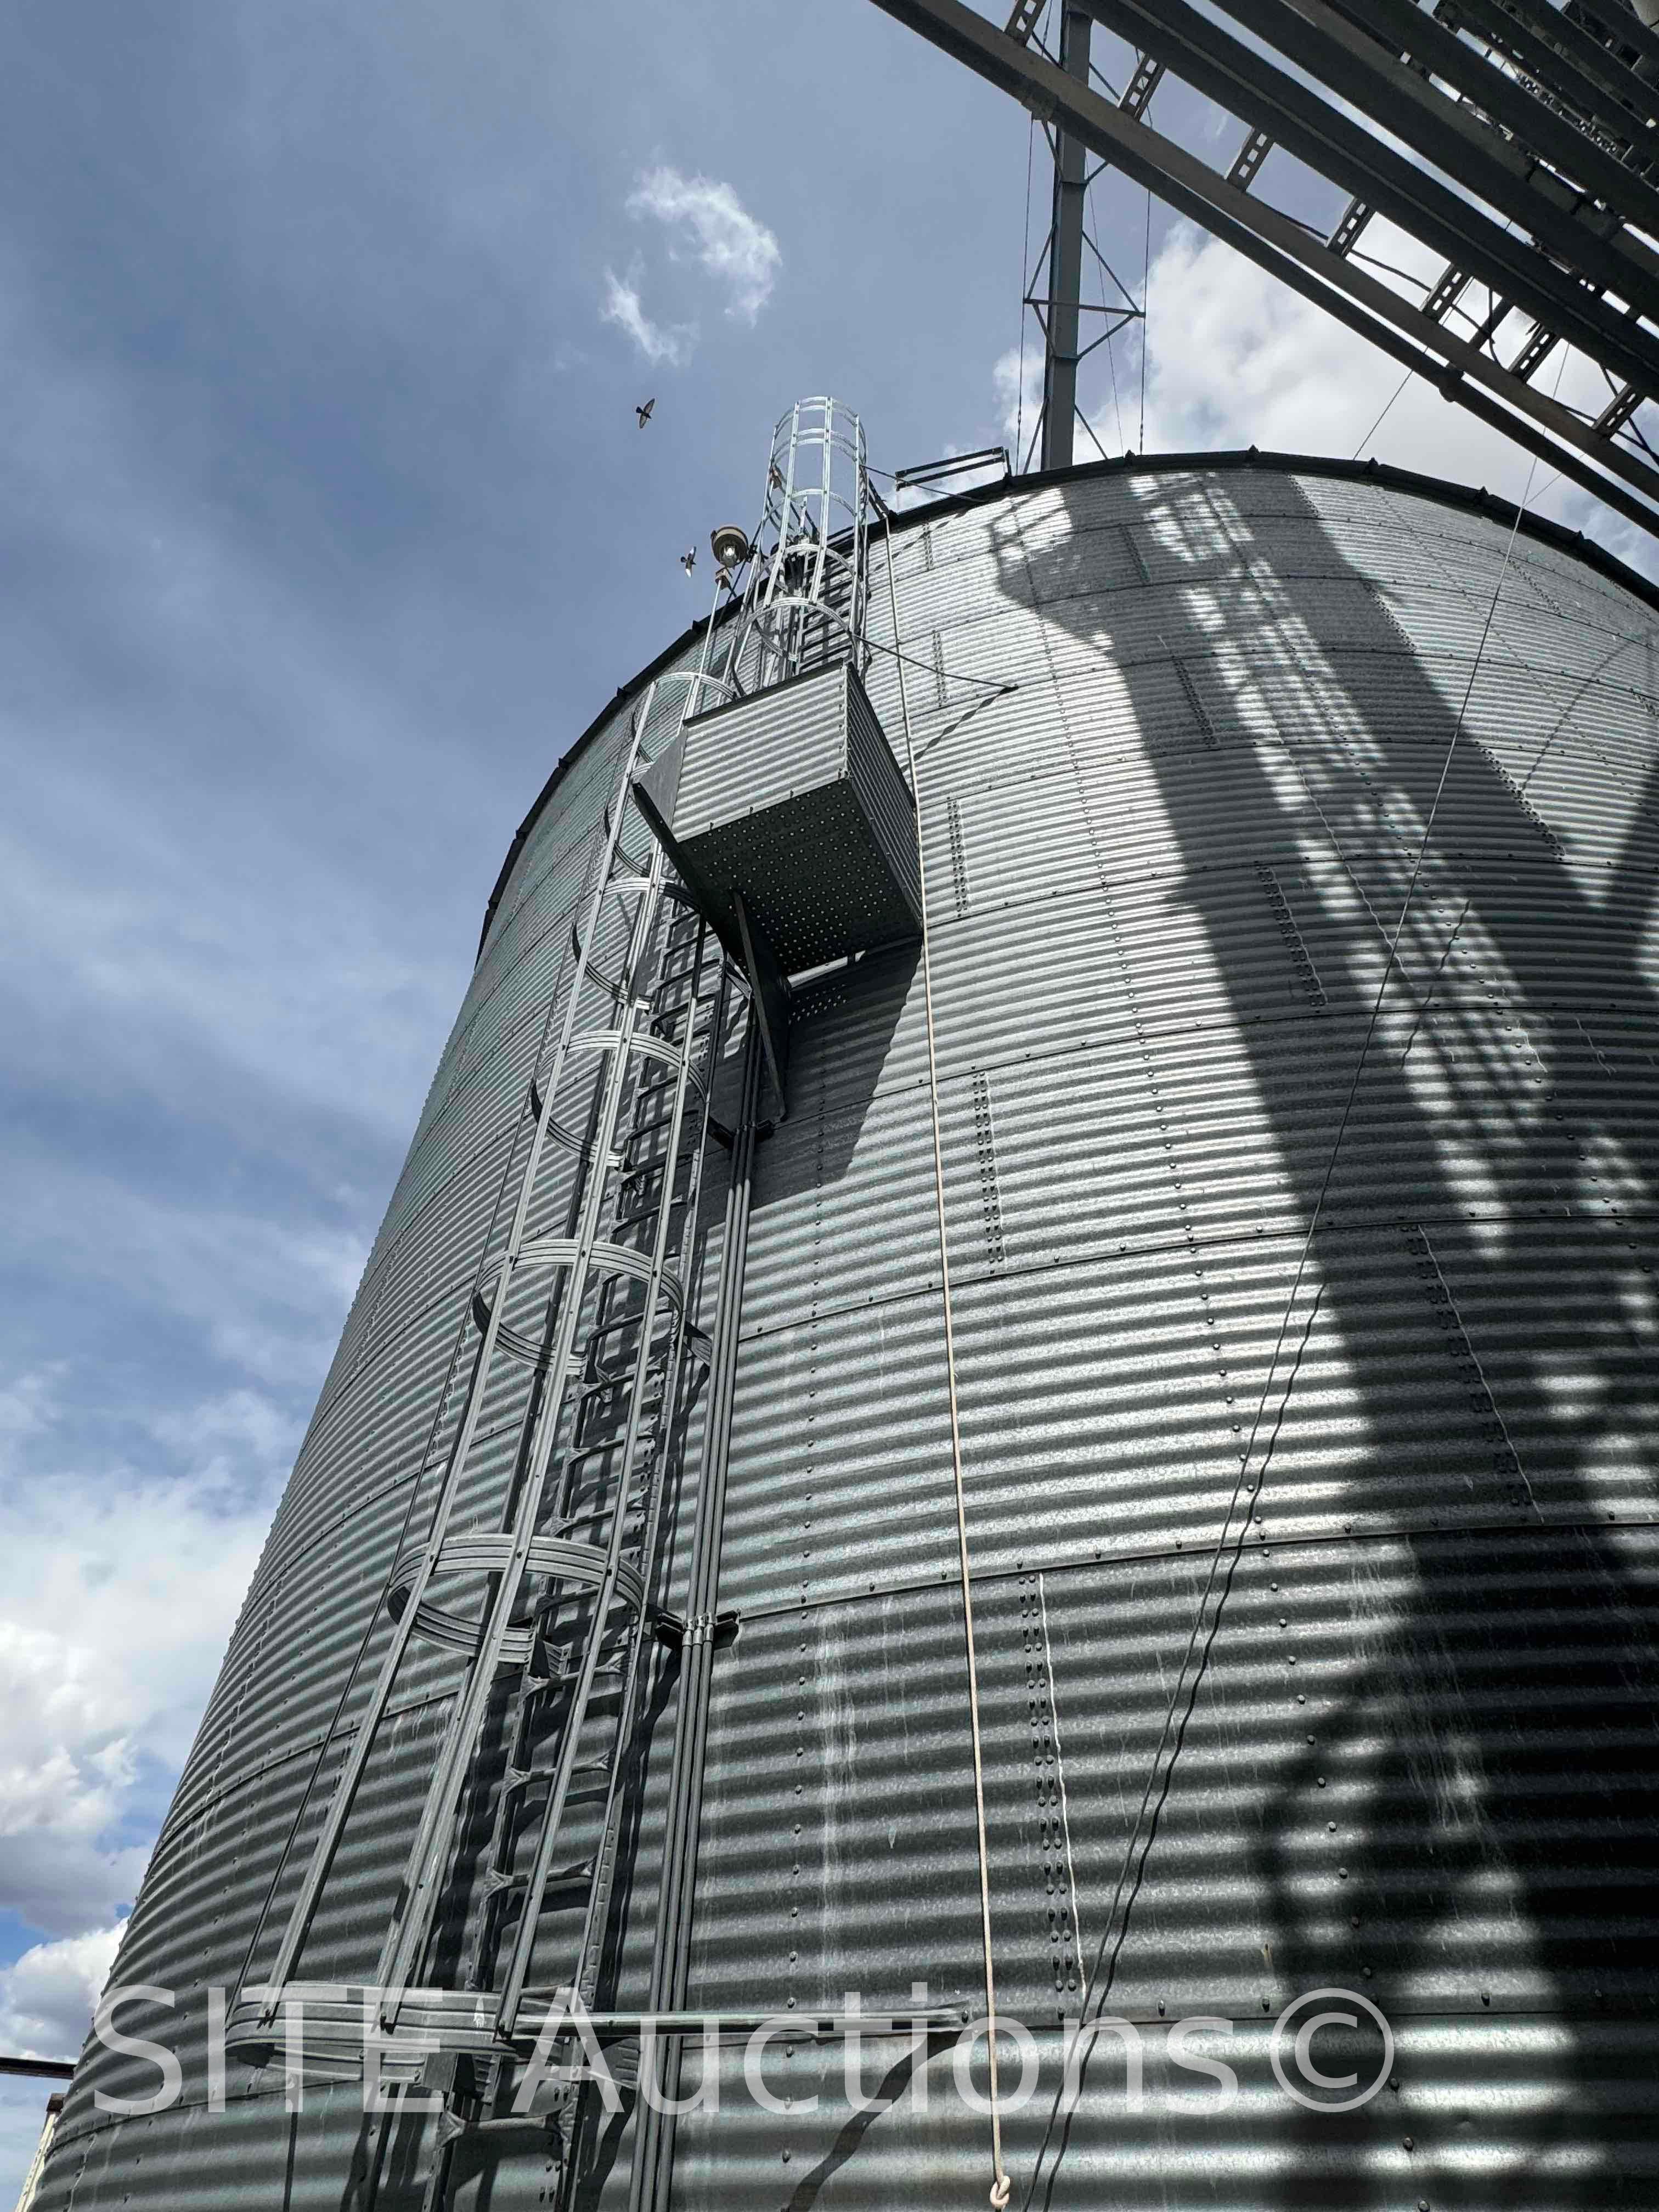 COMPLETE Butler Grain Storage System